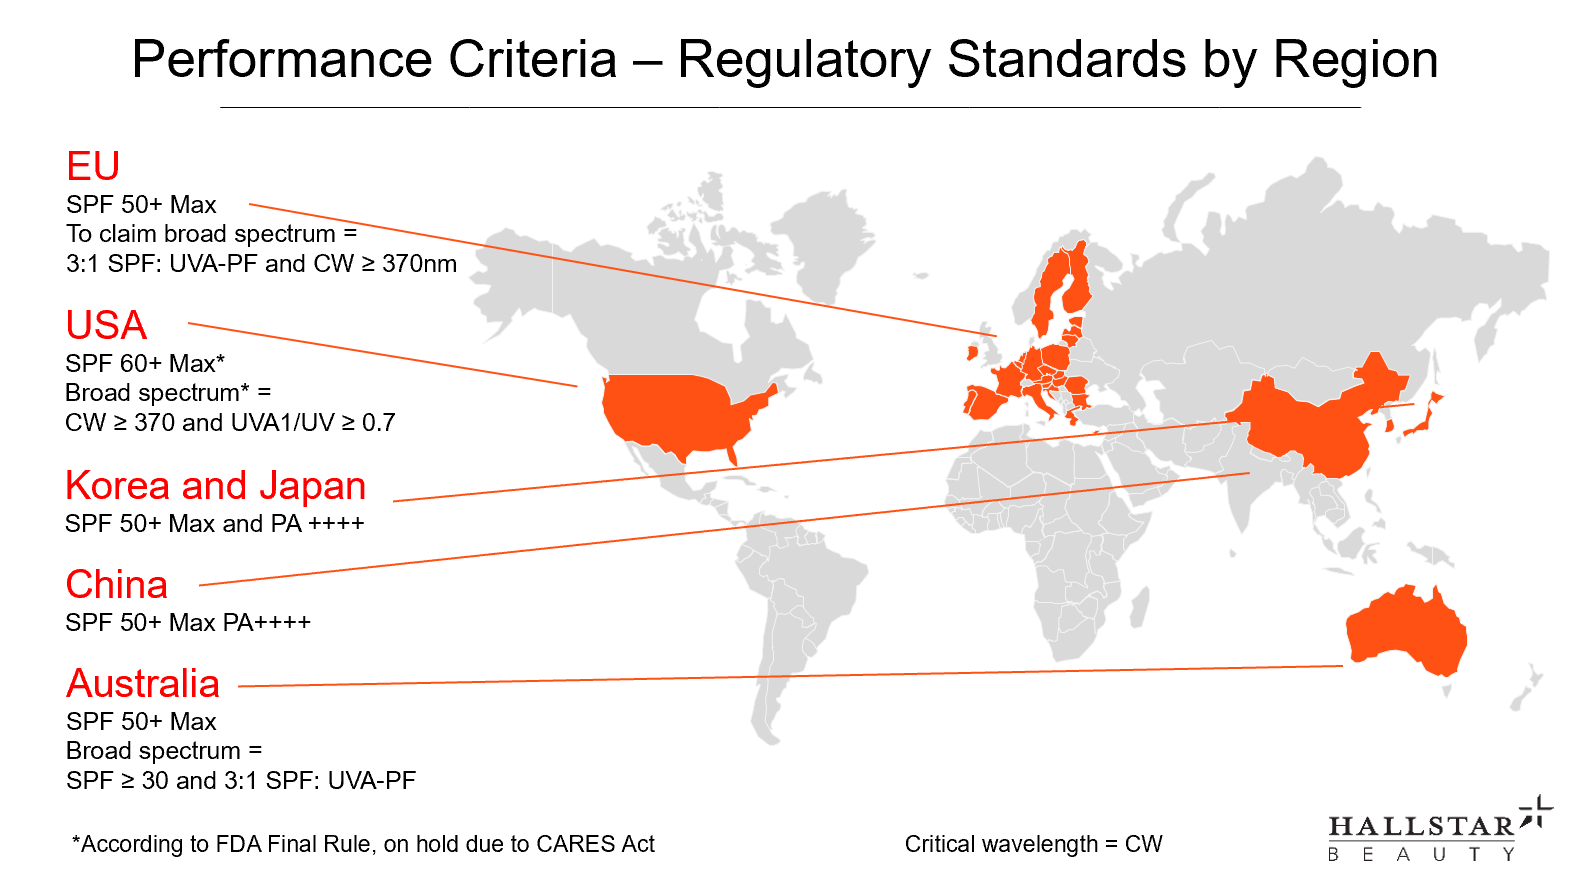 HB Regulatory Standards By Region